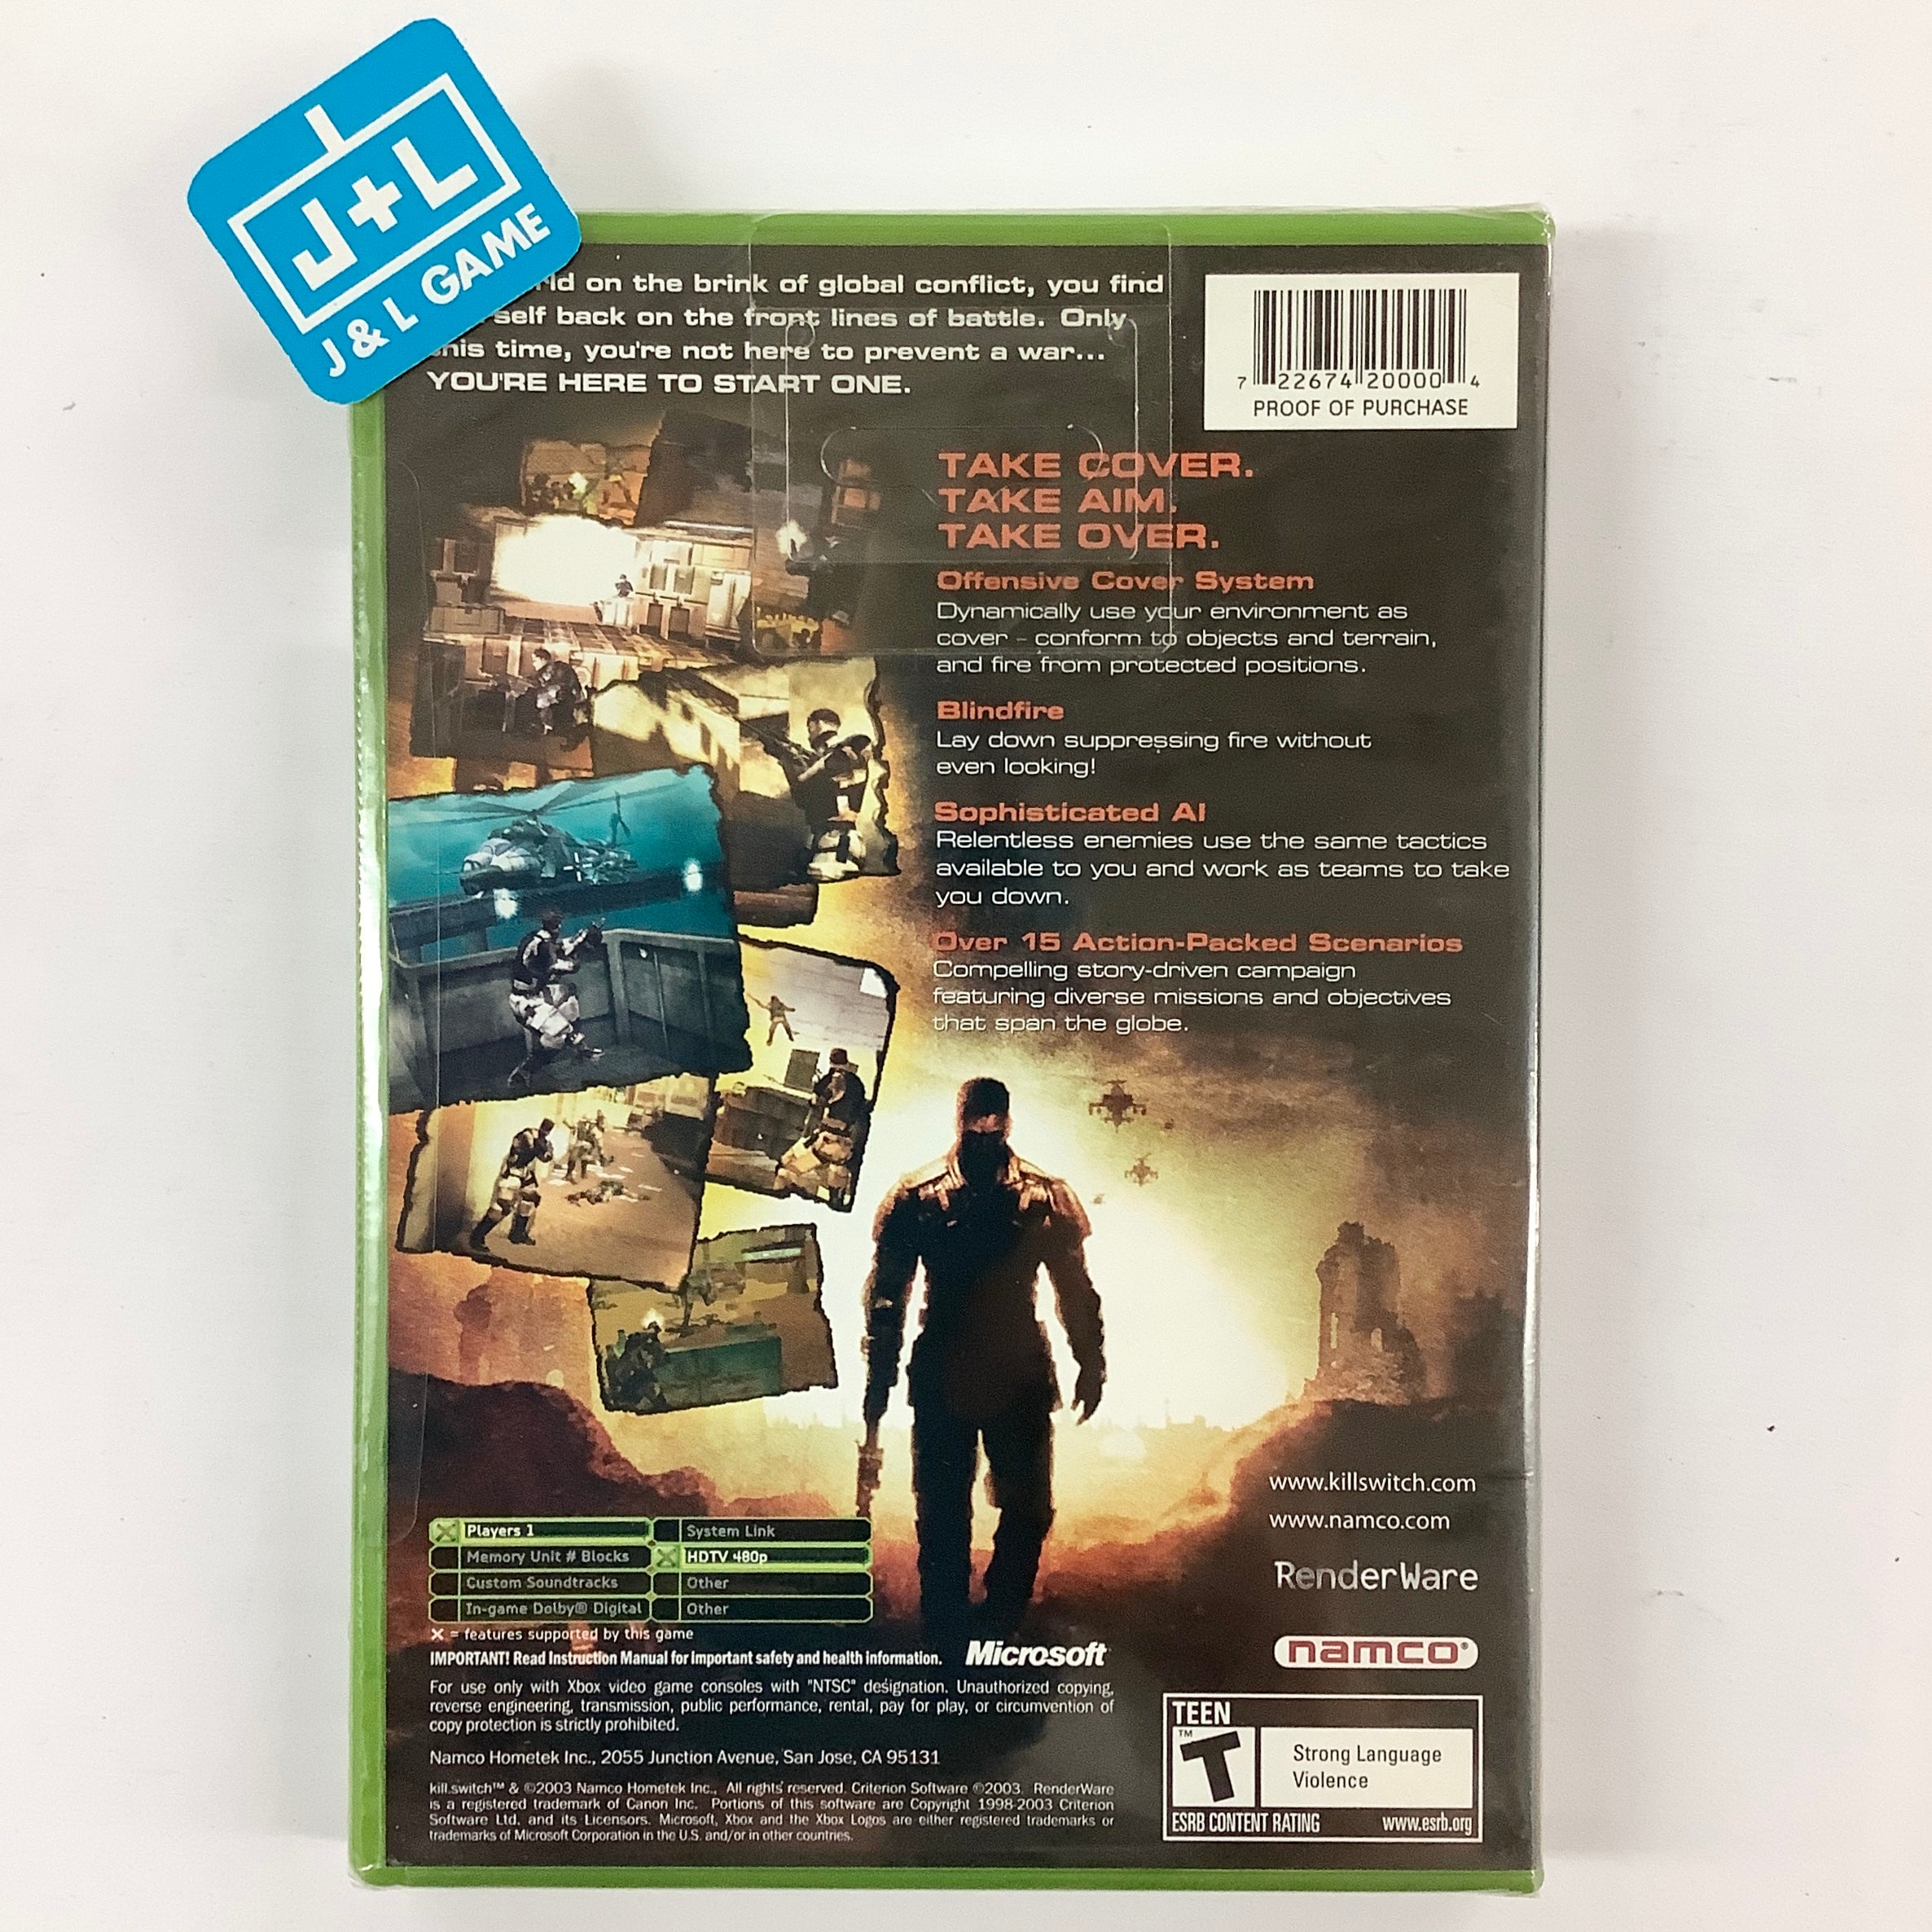 Kill.Switch - (XB) Xbox Video Games Namco   